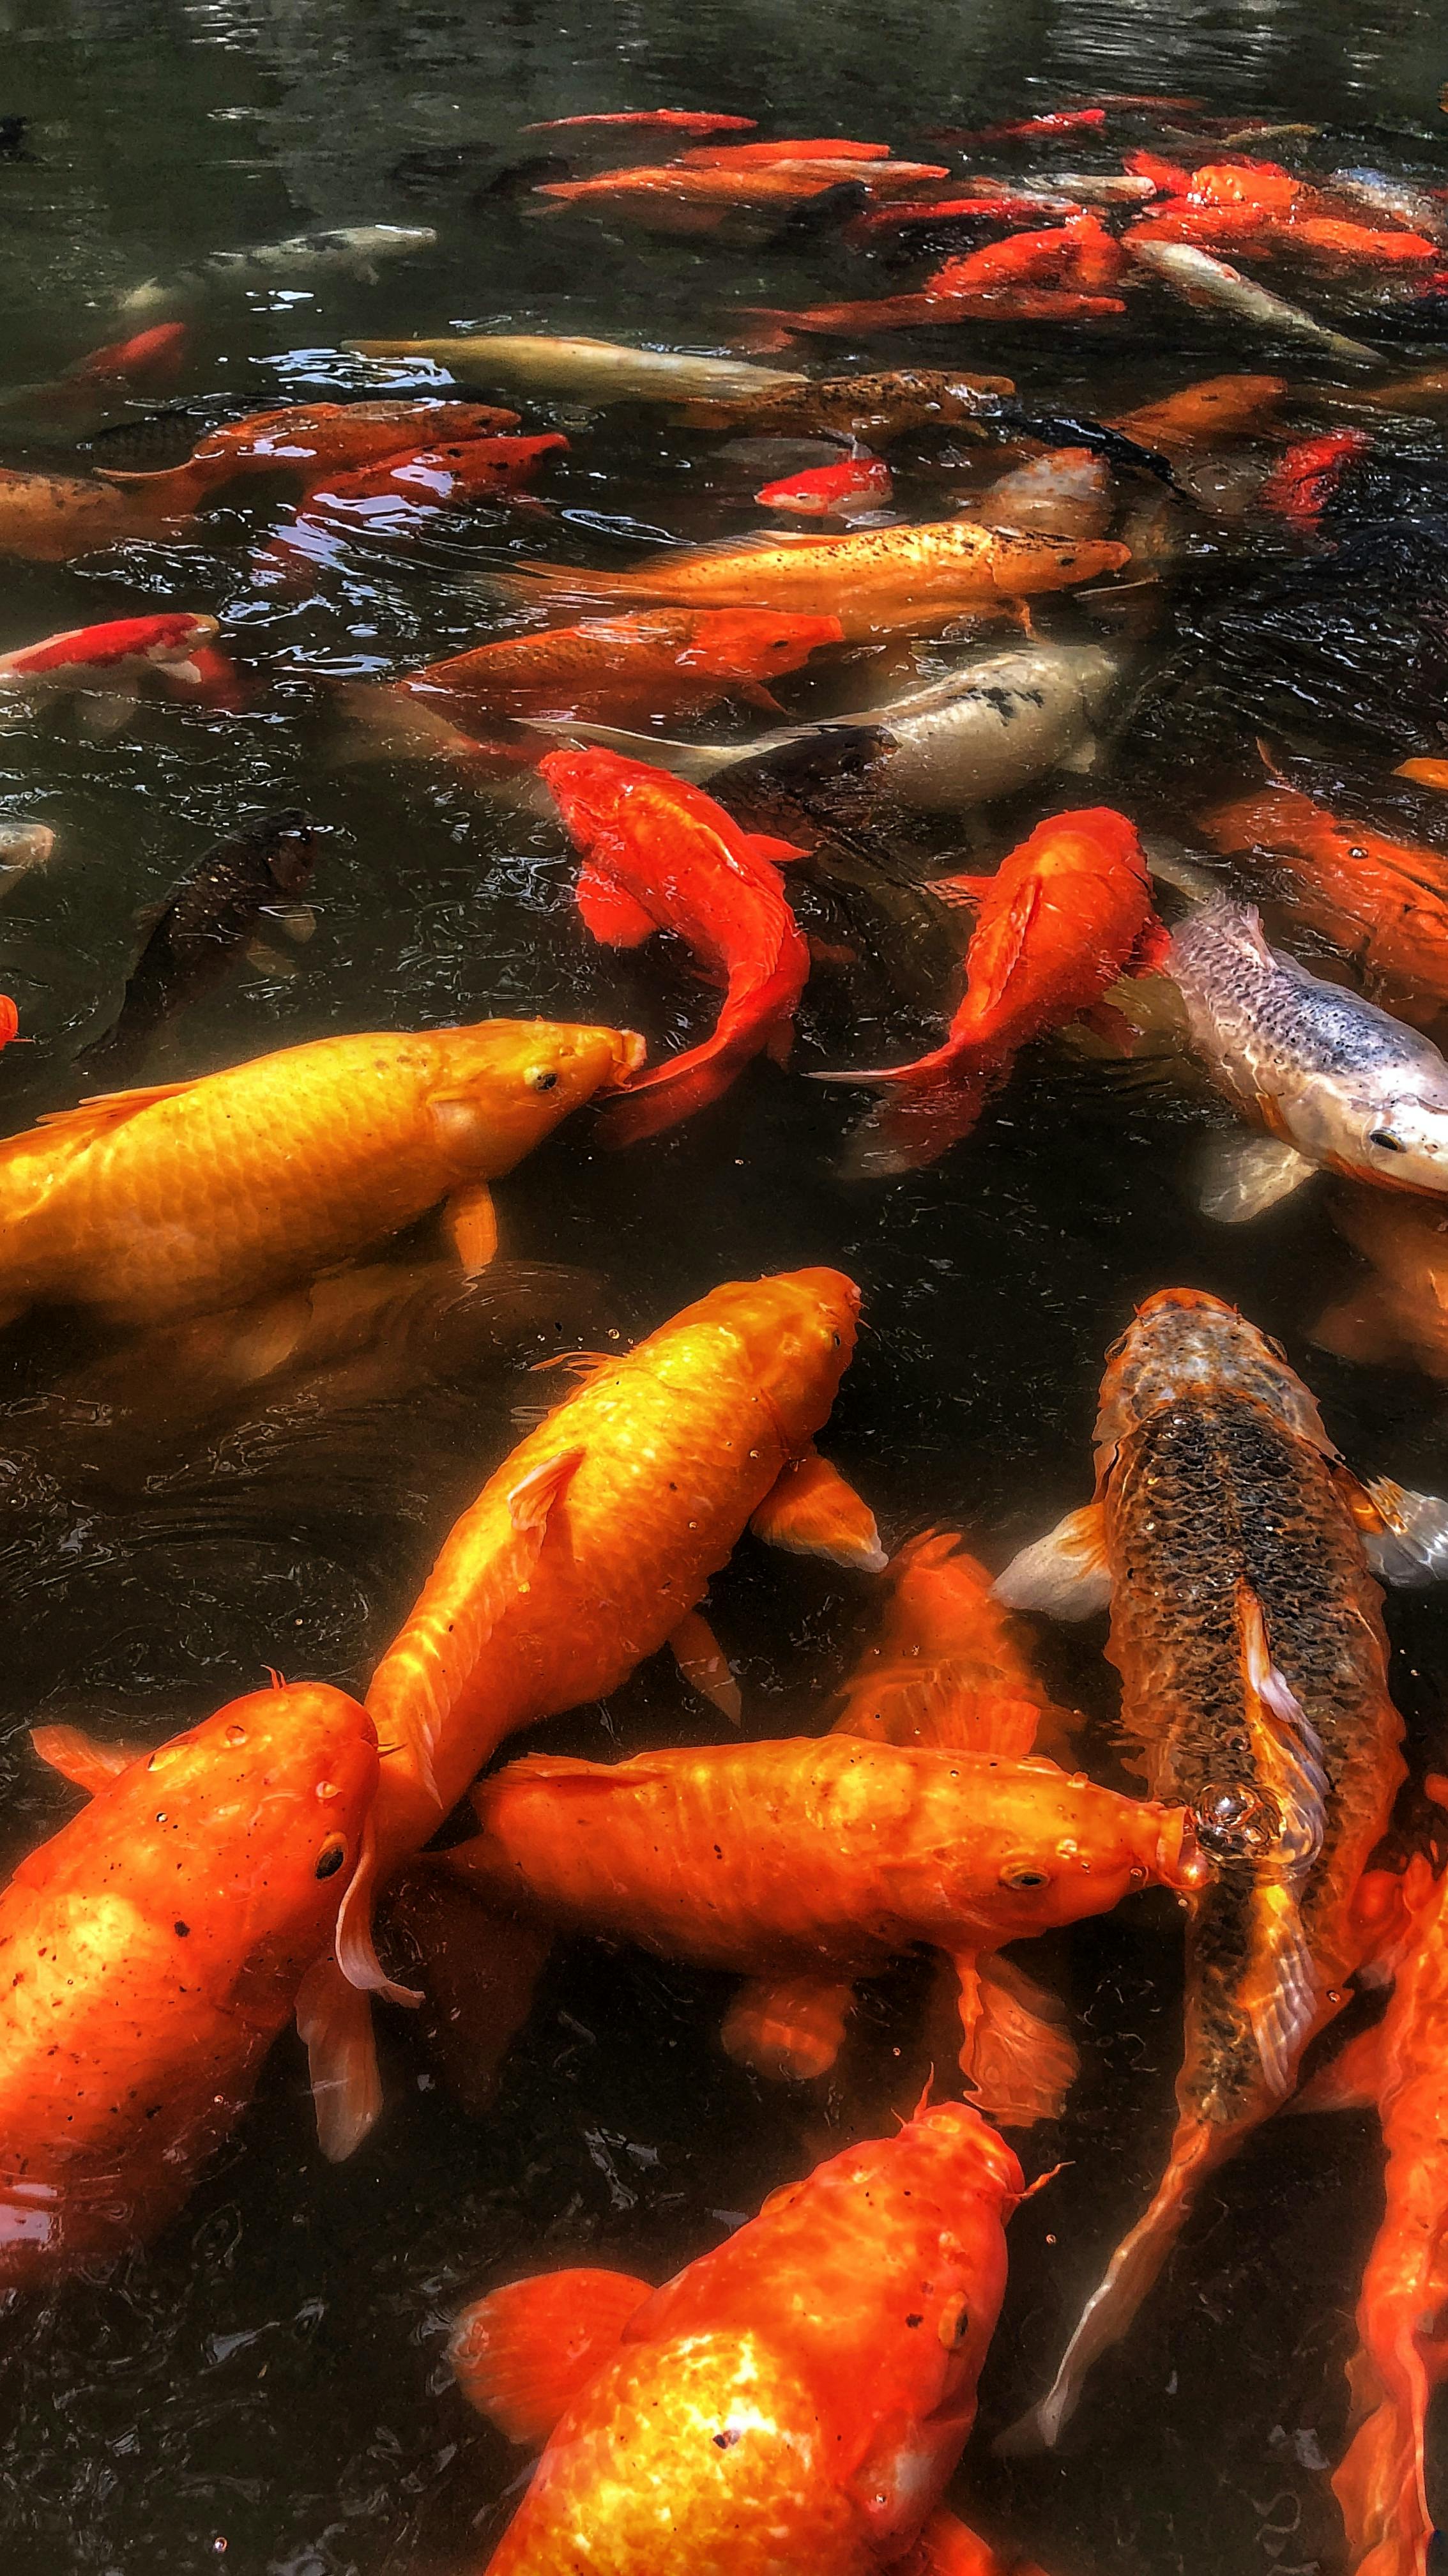 Free stock photo of #fish #carp #china #water #lake #16:9